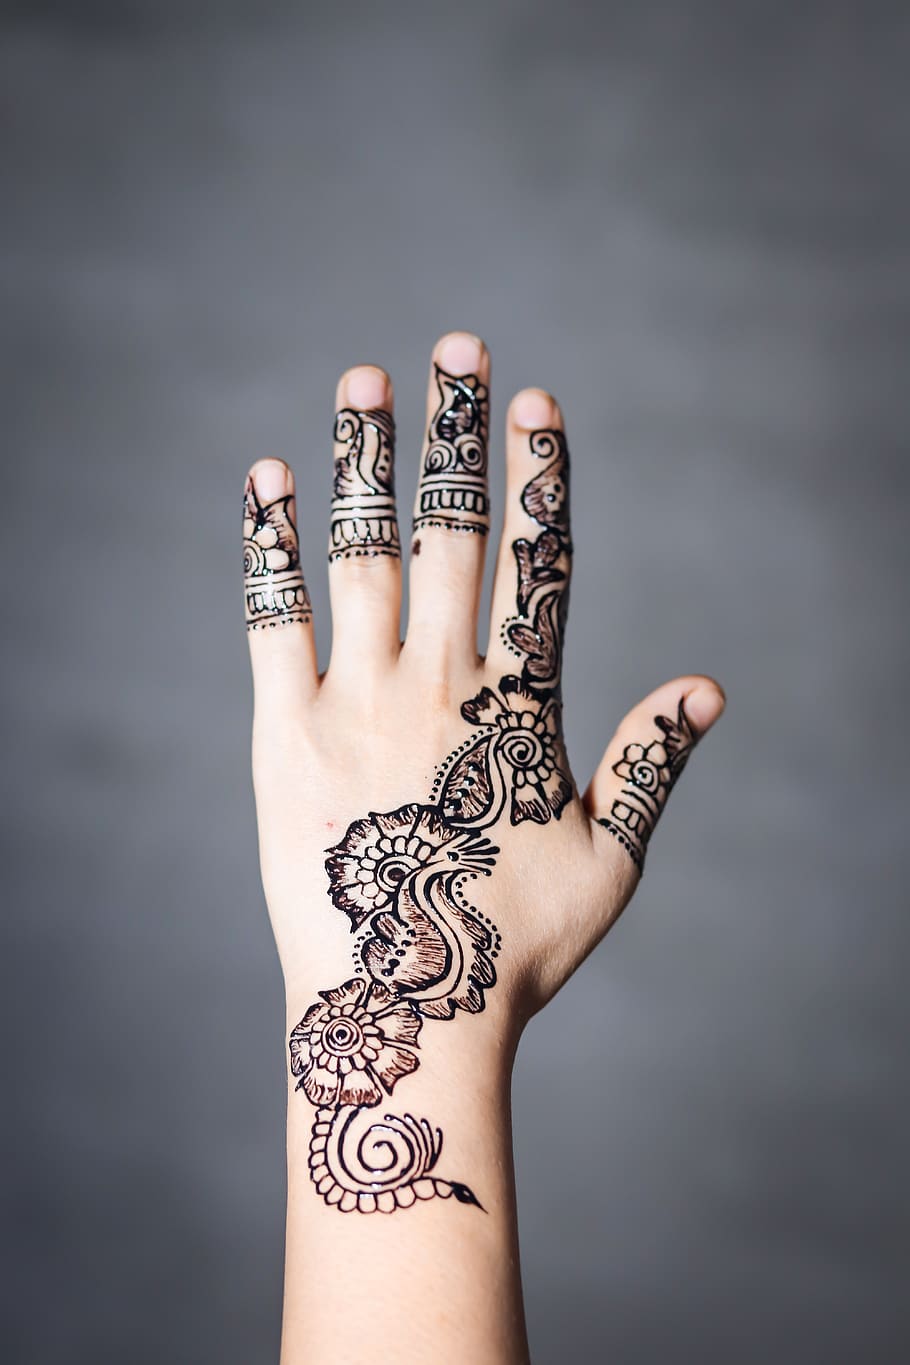 Tattoo Mehndi Design for hand  Henna tattoo design  Beautiful mehndi   Temporary tattoos design  YouTube